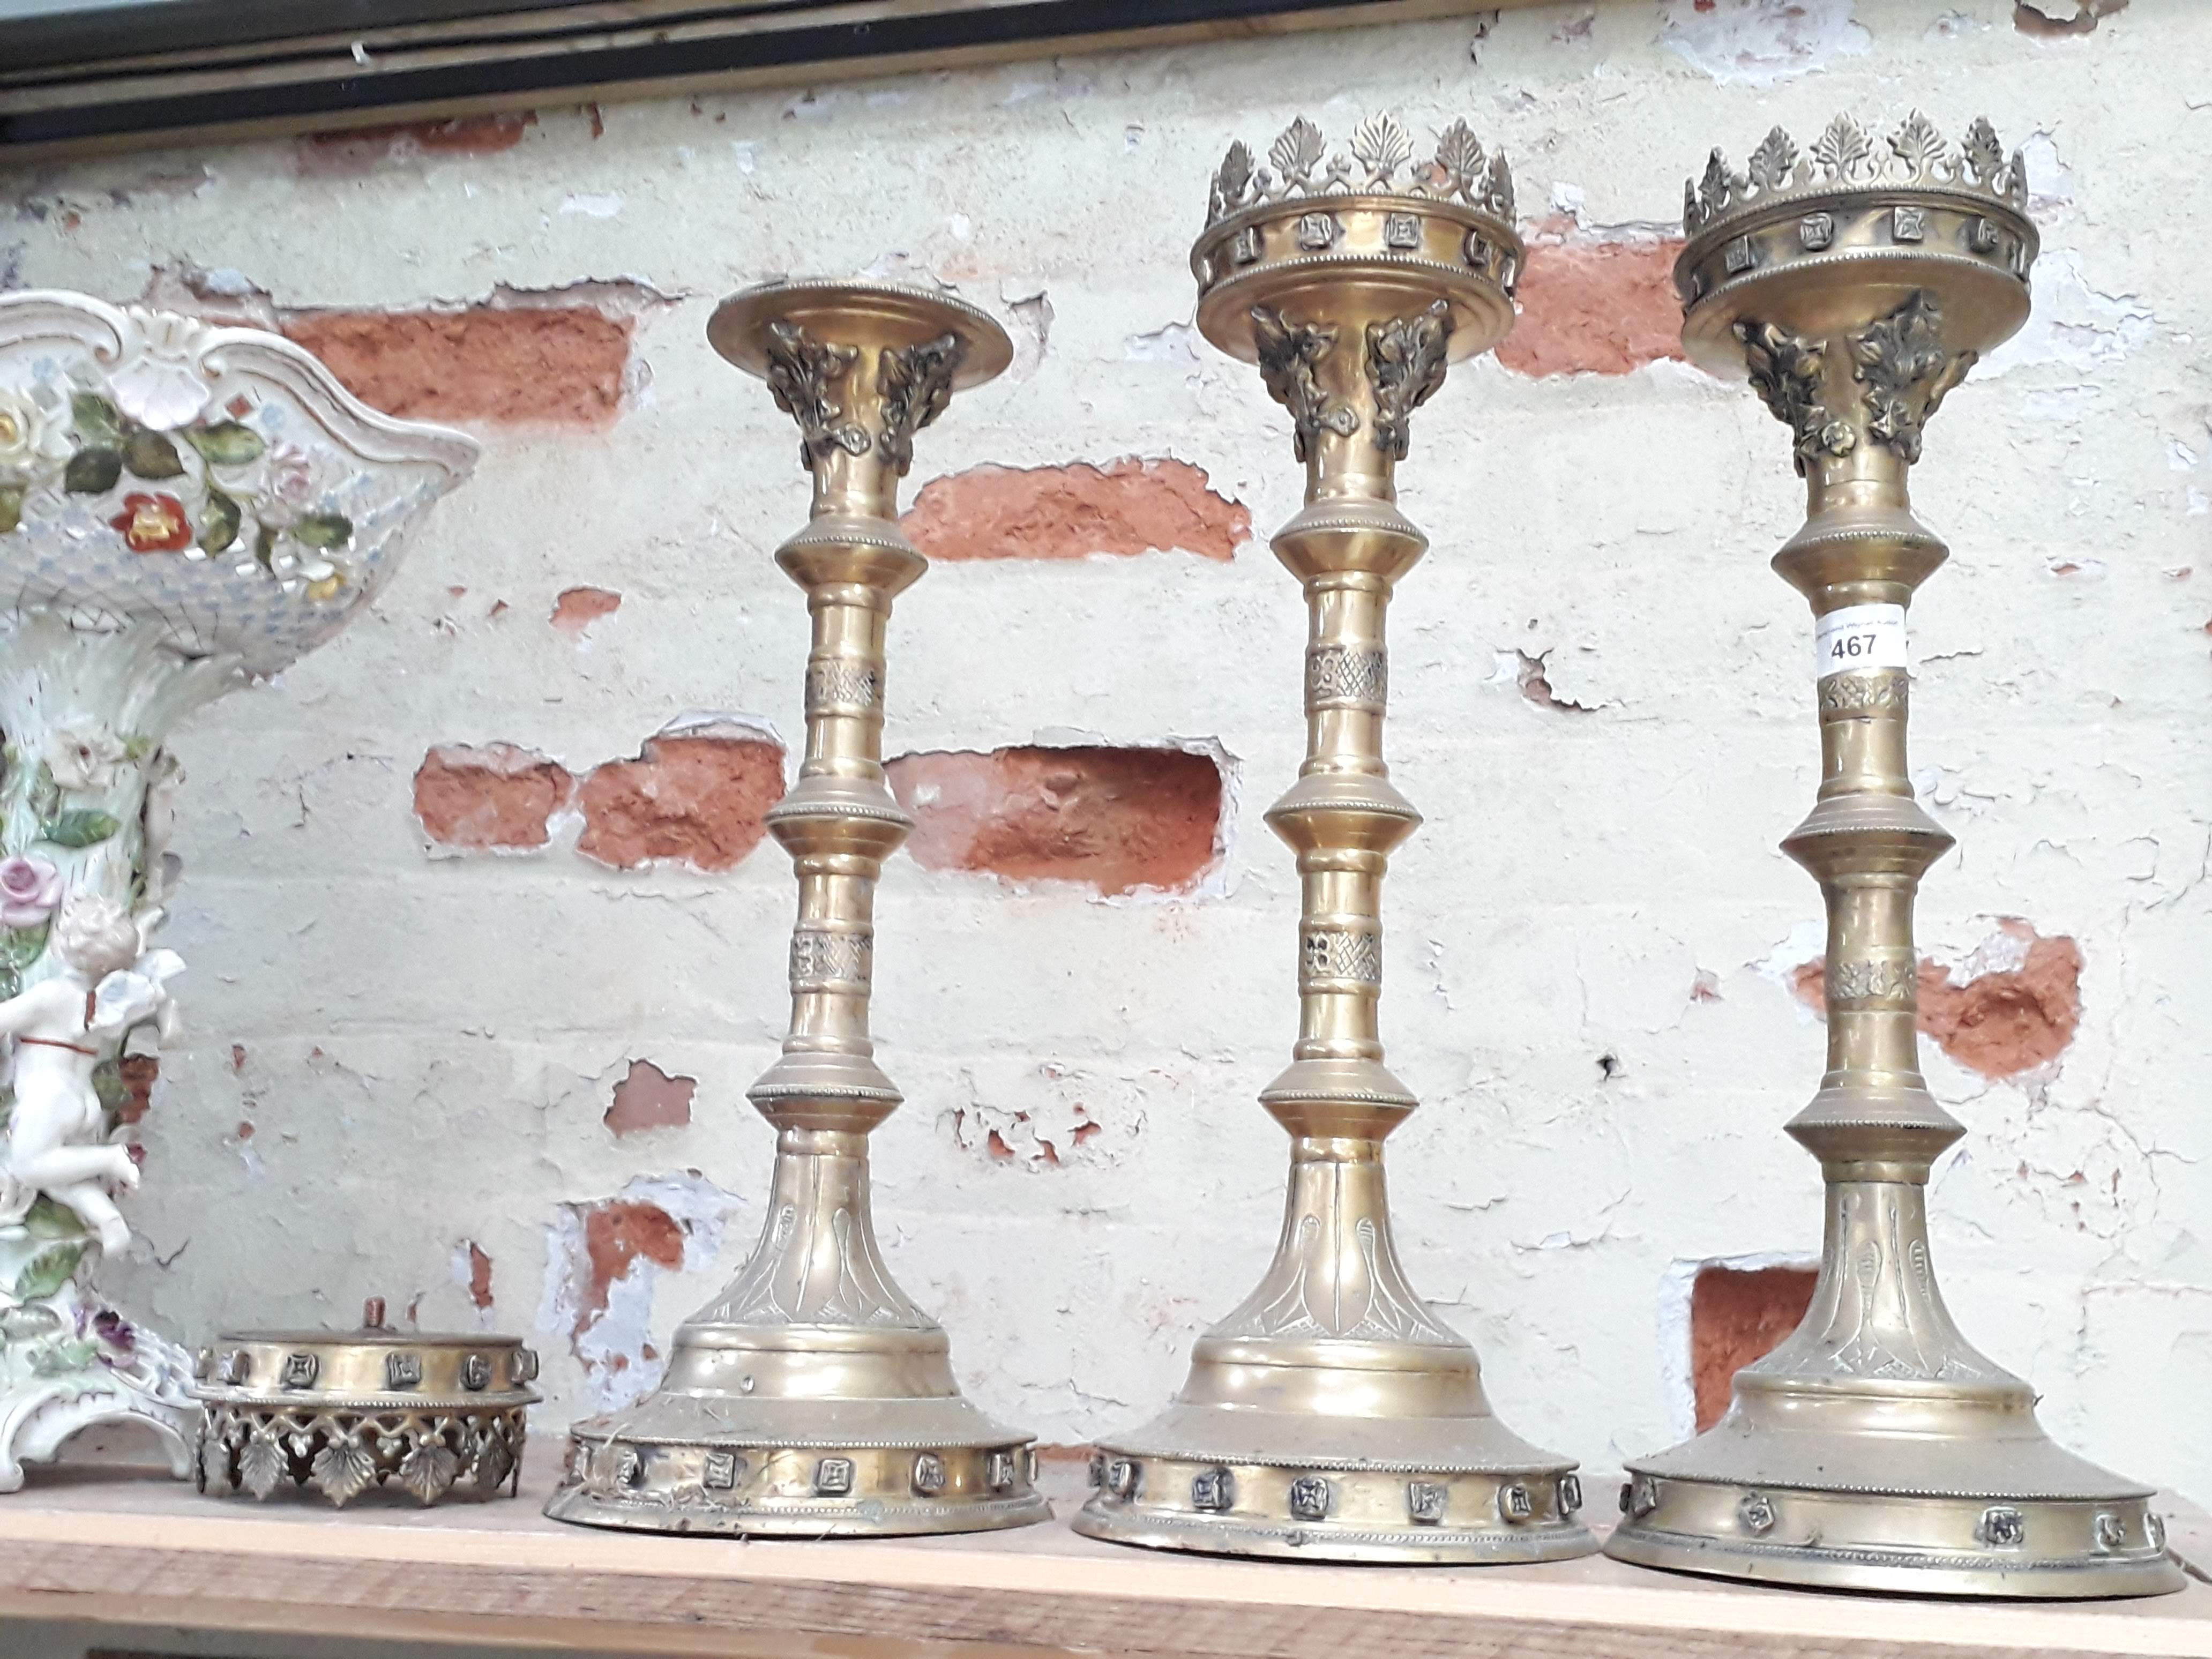 A group of three church brass candlesticks, height 47cm - 49cm.